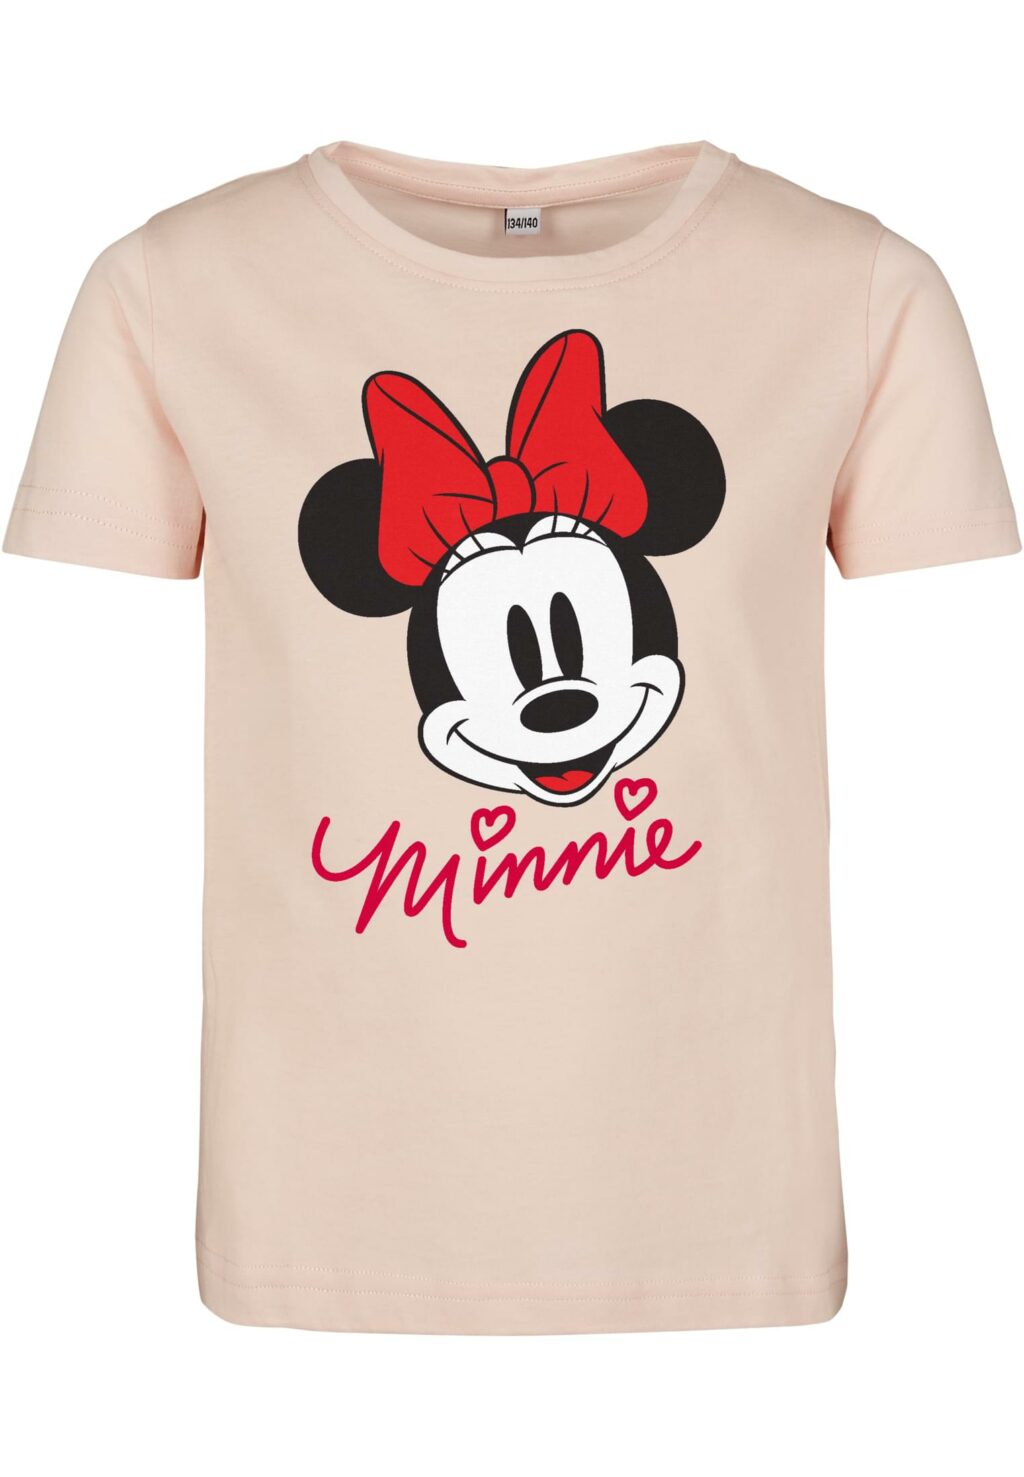 Minnie Mouse Kids Tee pink MTK196